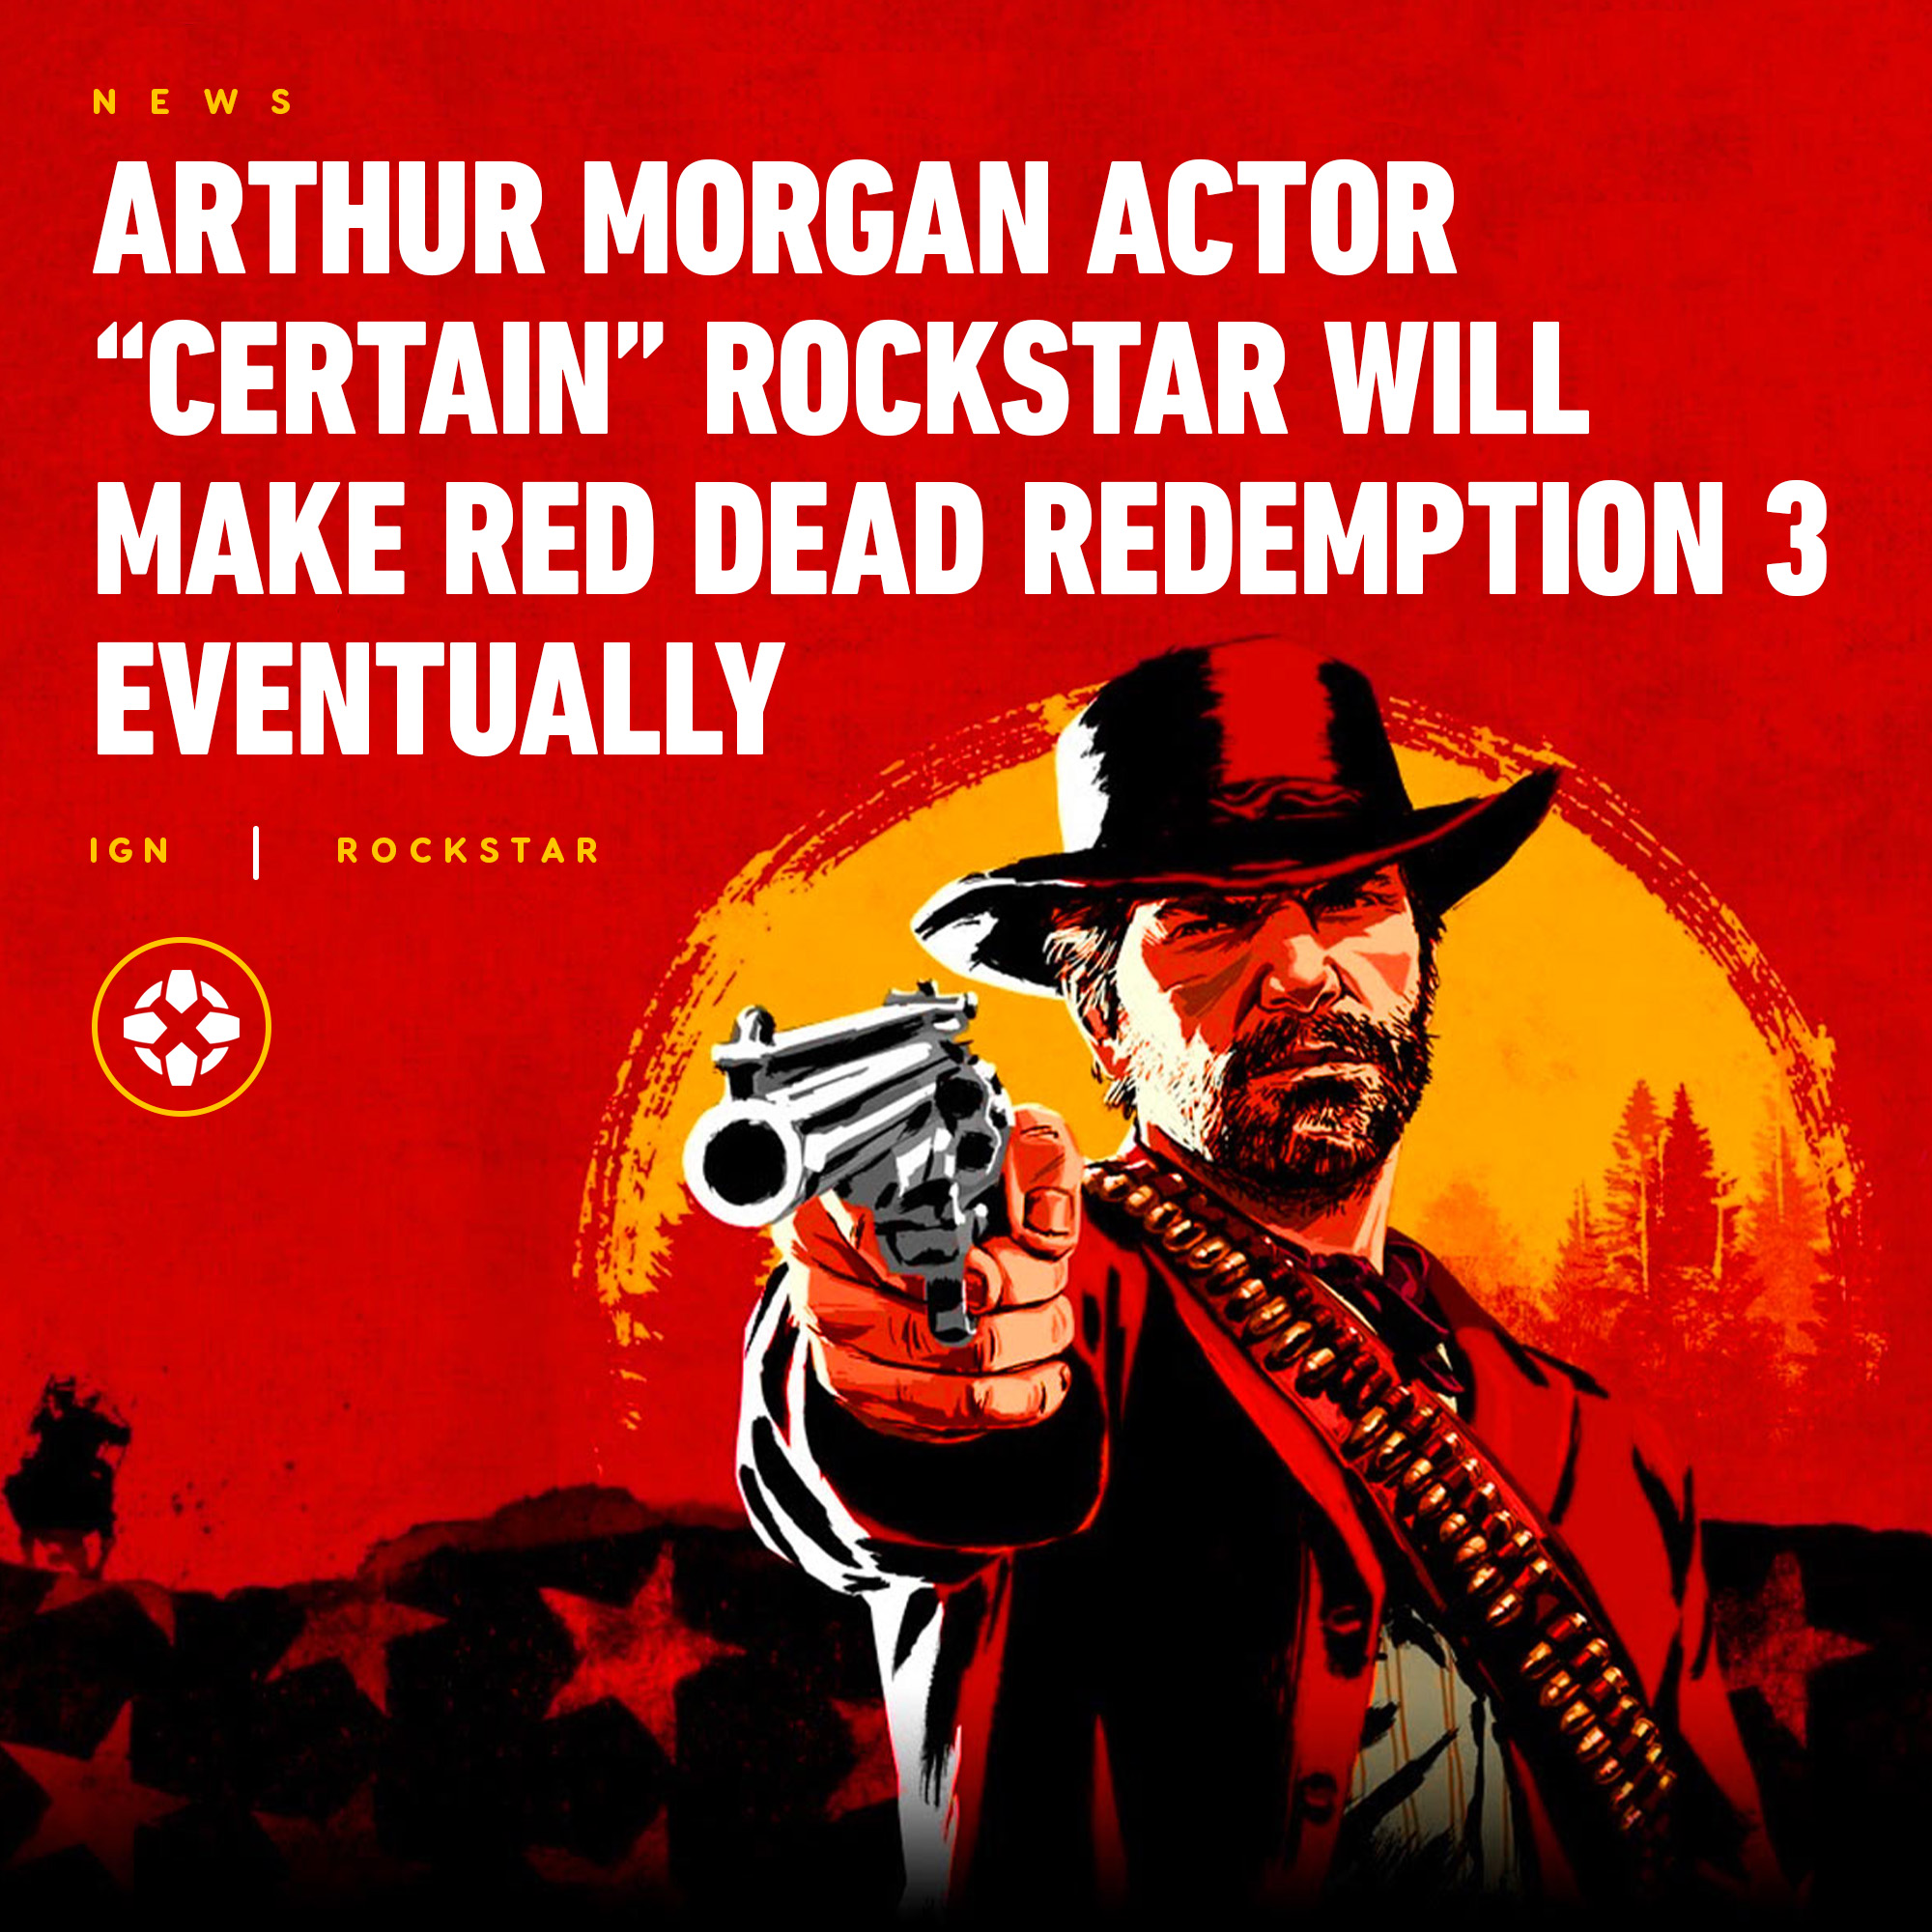 Red Dead Redemption 3 Seems Certain, Says Arthur Morgan Actor